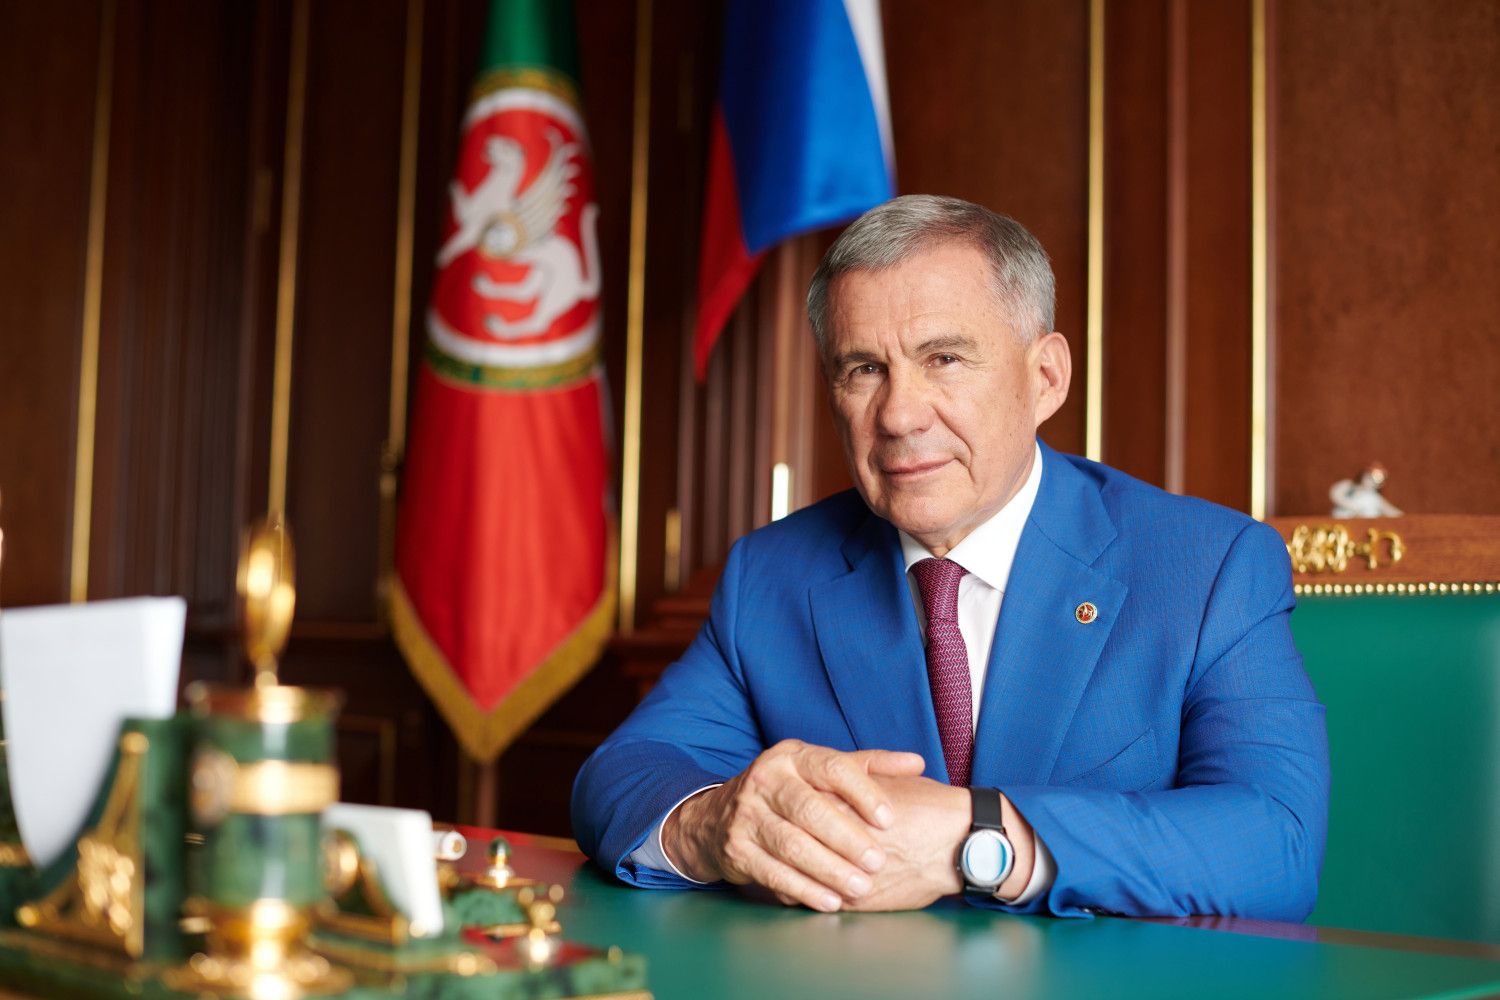 Ties between Russia, Muslim countries accelerating, says Tatarstan leader